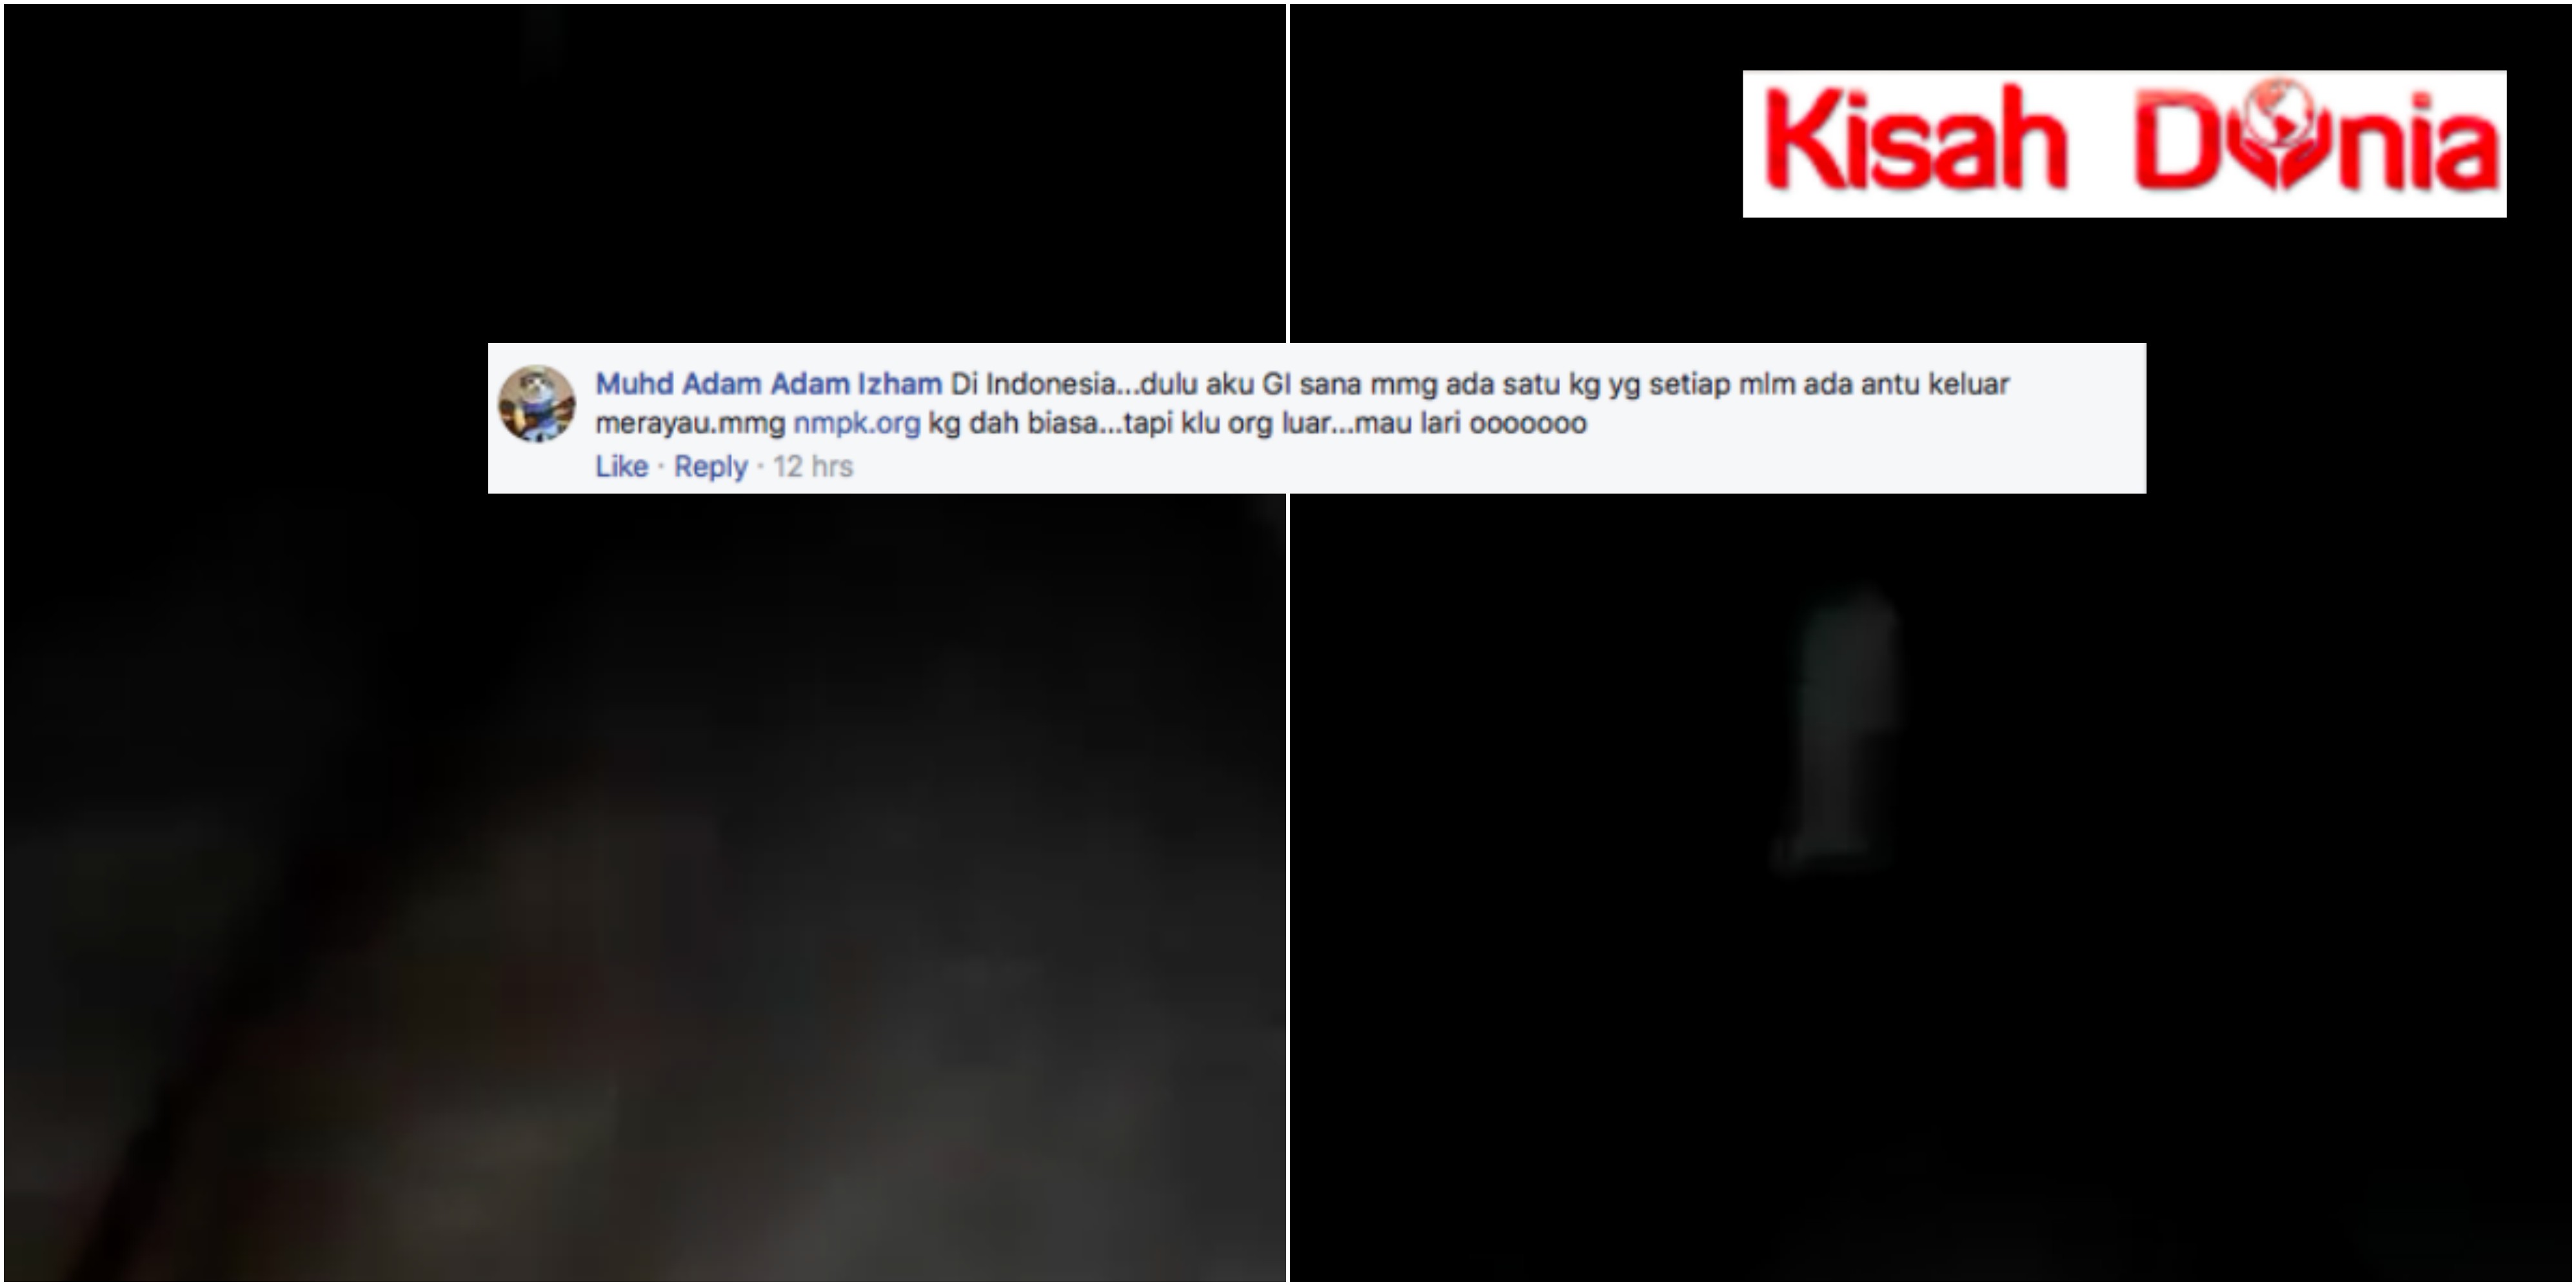 [VIDEO] ‘Macam Baju Tidur’ – Pelancaran Album Baru DSV Tarik Perhatian Netizen. Cantiknya!